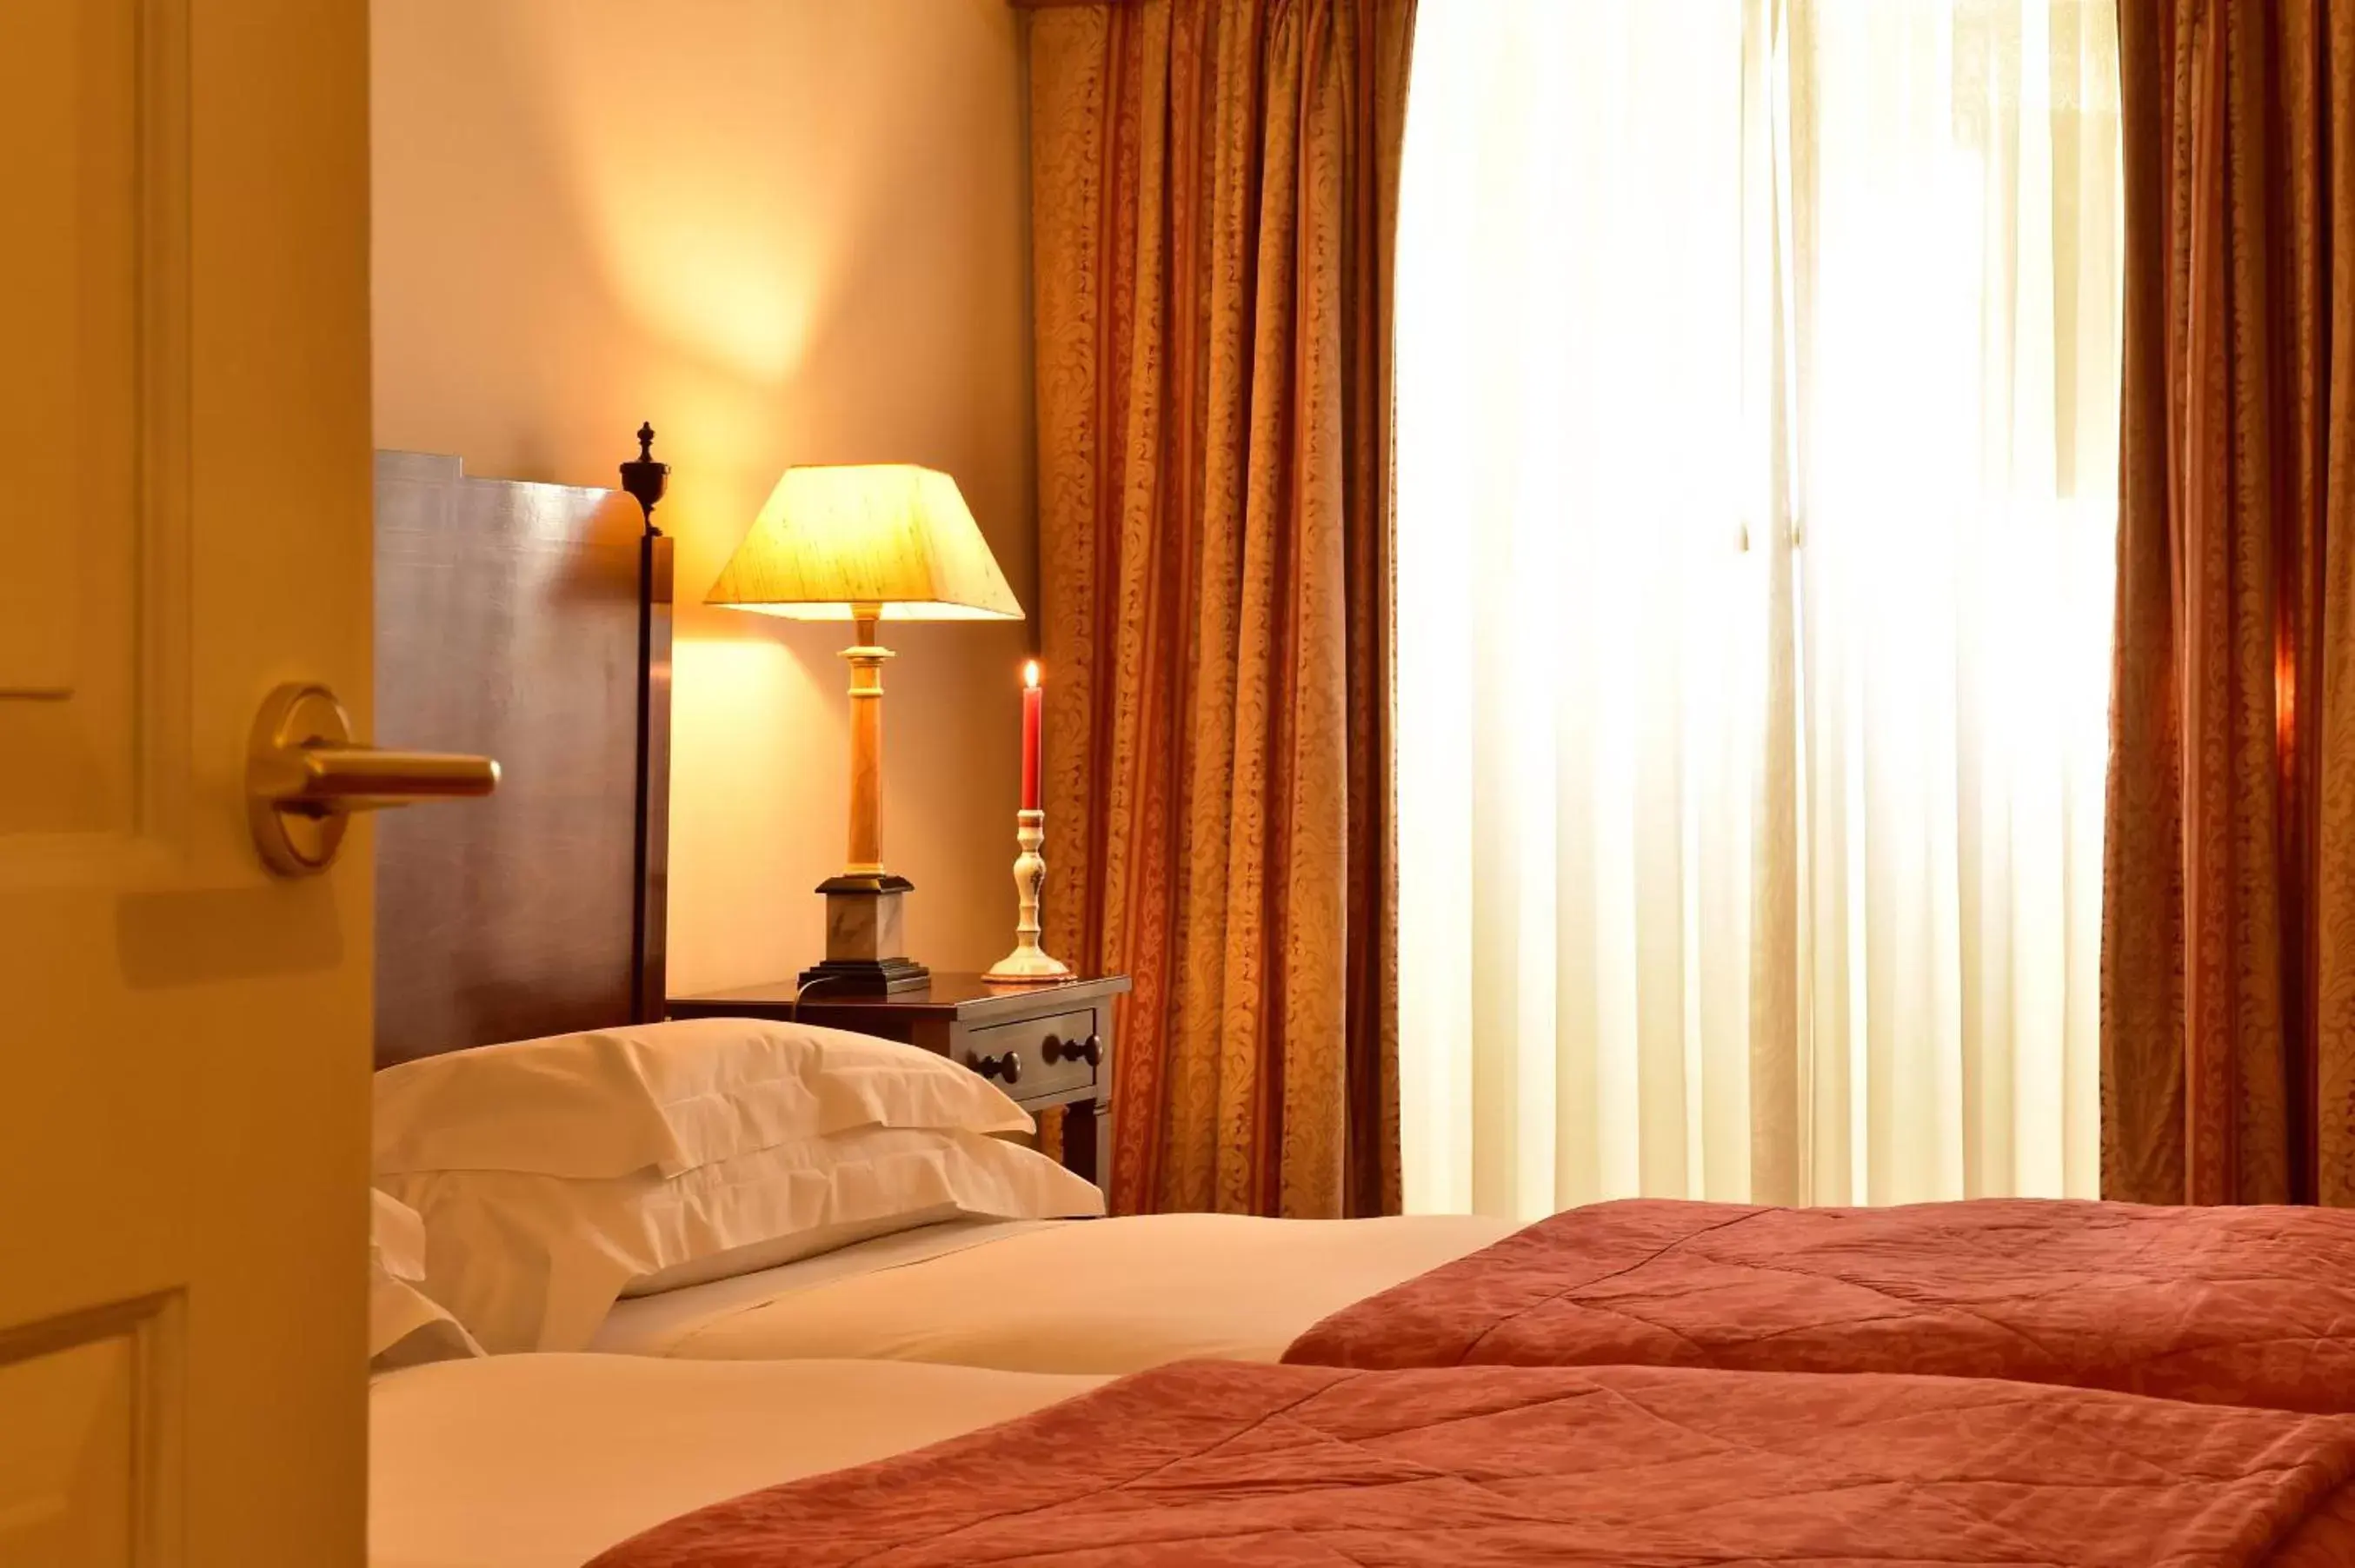 Bed, Room Photo in Pousada Palacio de Queluz